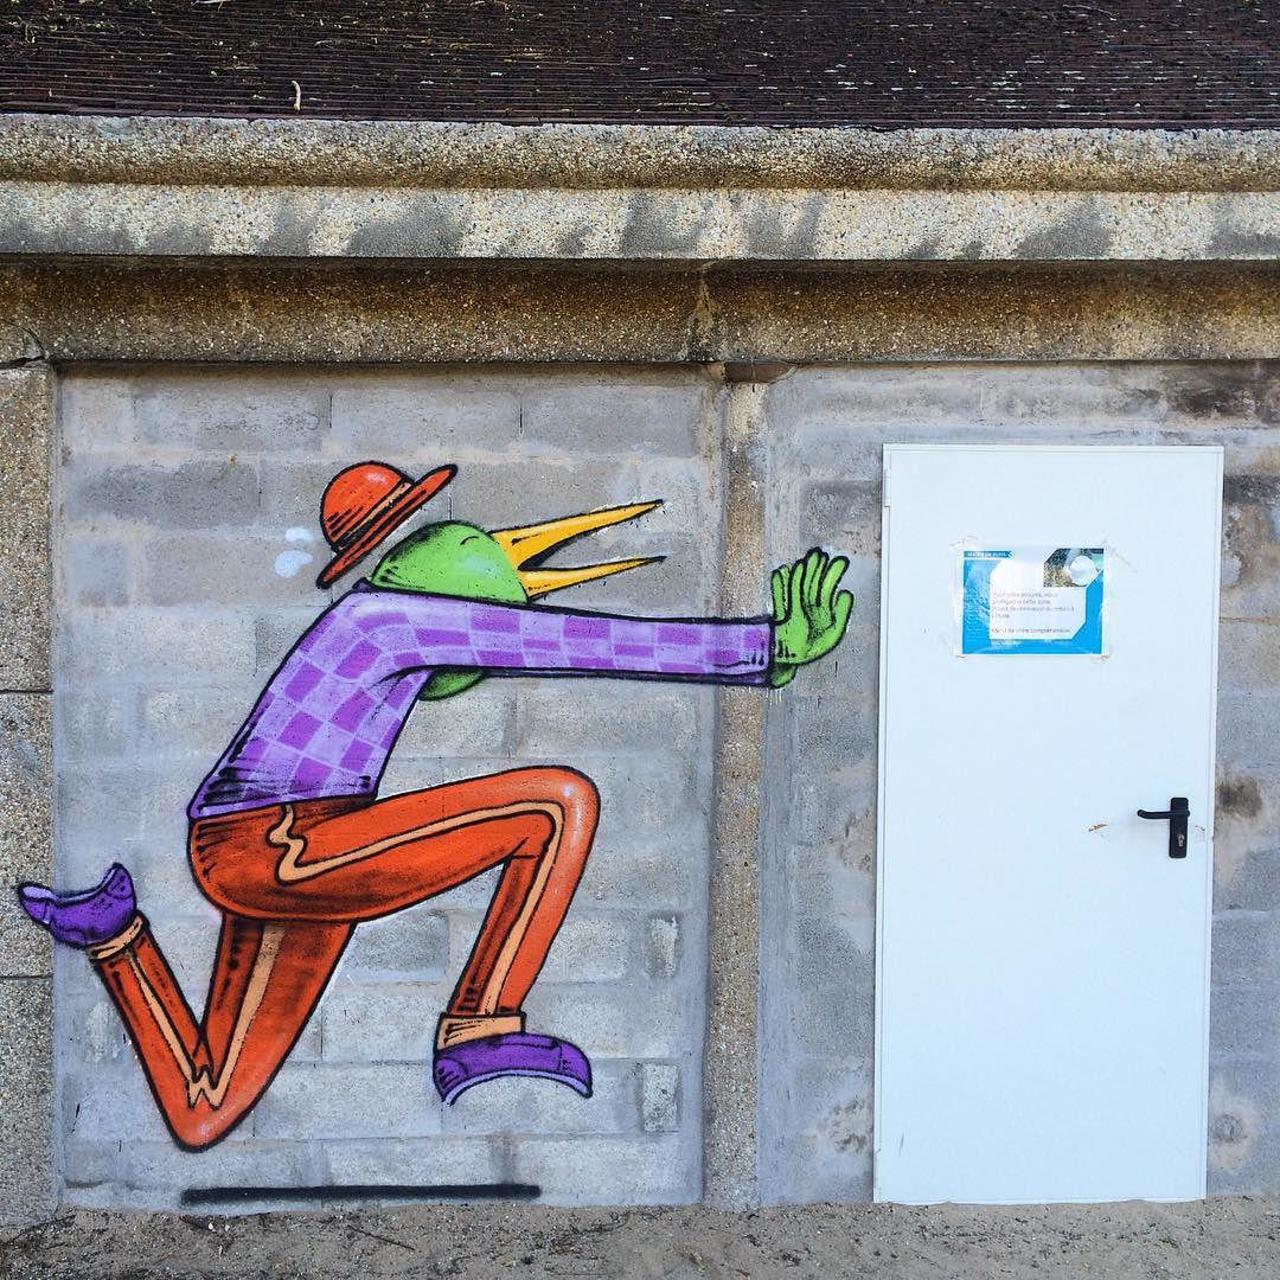 #Paris #graffiti photo by @benapix http://ift.tt/1VoTuSt #StreetArt https://t.co/rylirLBmjZ